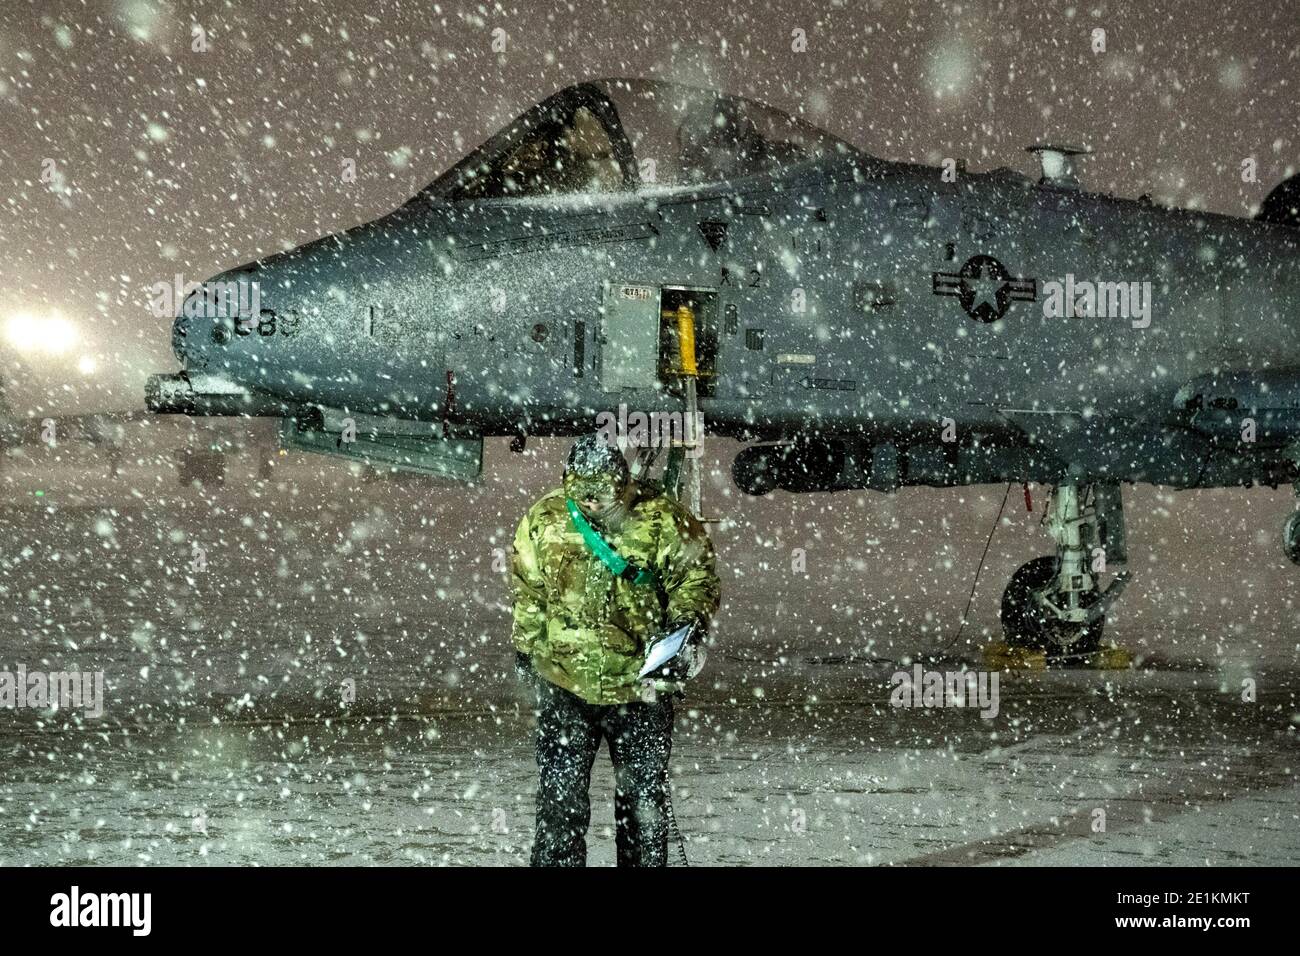 Pyeongtaek, South Korea. 06th Jan, 2021. A U.S. Airman prepares an an A-10 Thunderbolt II close air support fighter aircraft for flight operations during a heavy snowfall at Osan Air Base January 6, 2021 in Pyeongtaek, South Korea. Credit: Planetpix/Alamy Live News Stock Photo